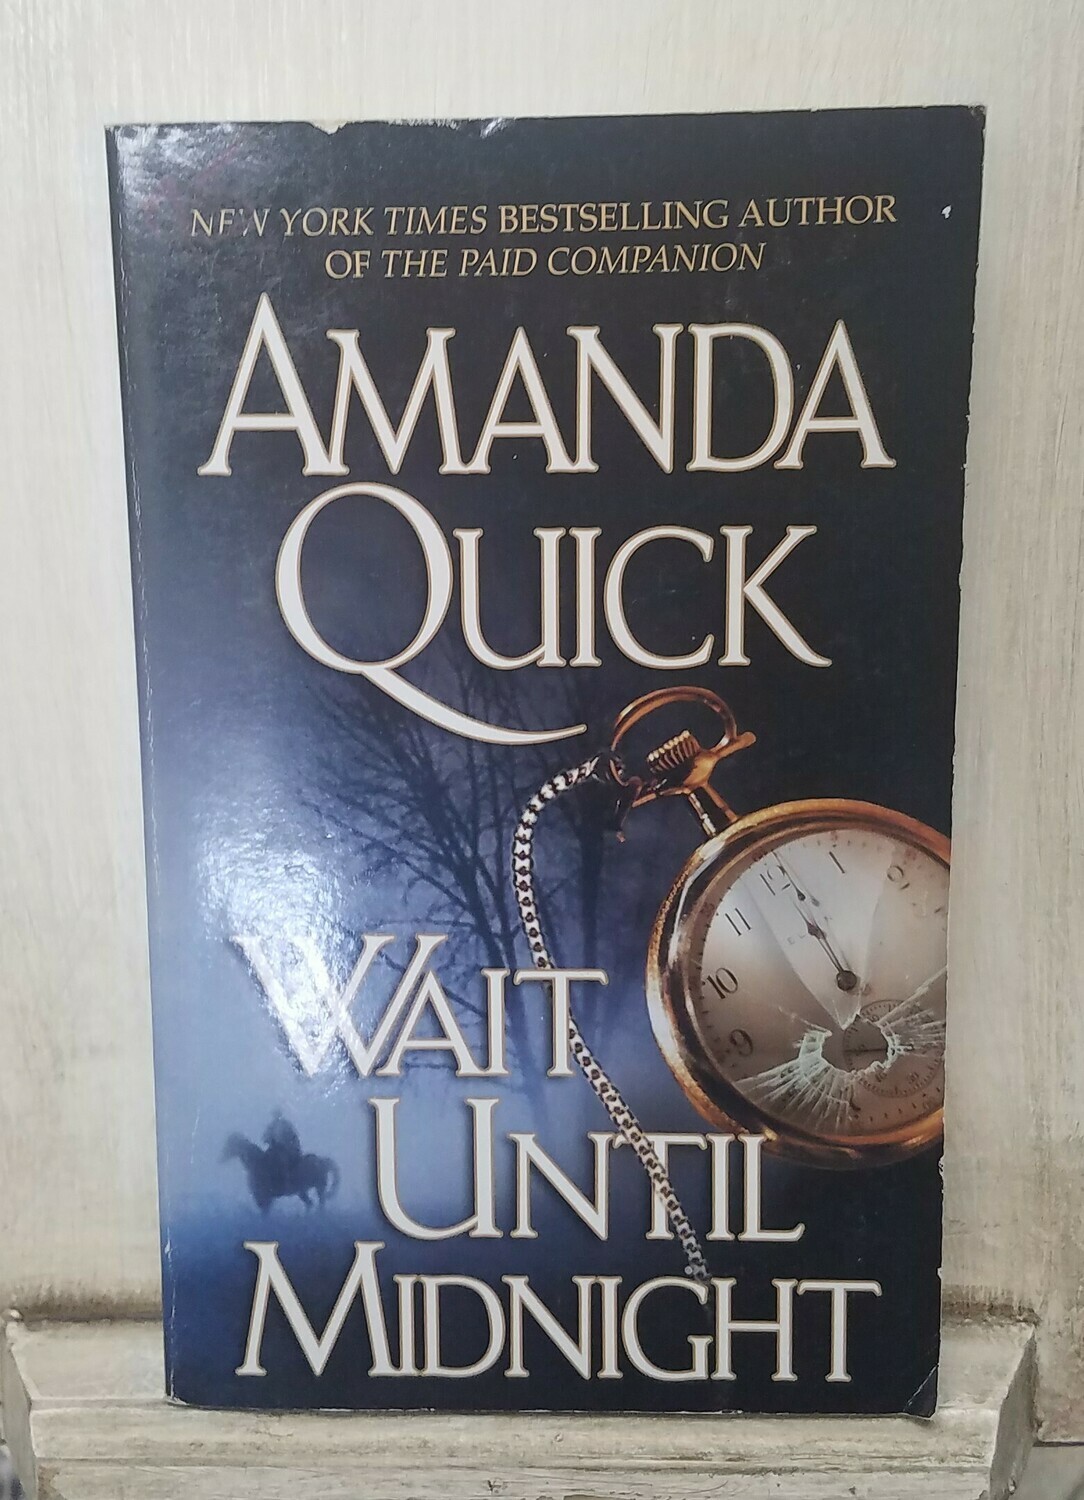 Wait Until Midnight by Amanda Quick